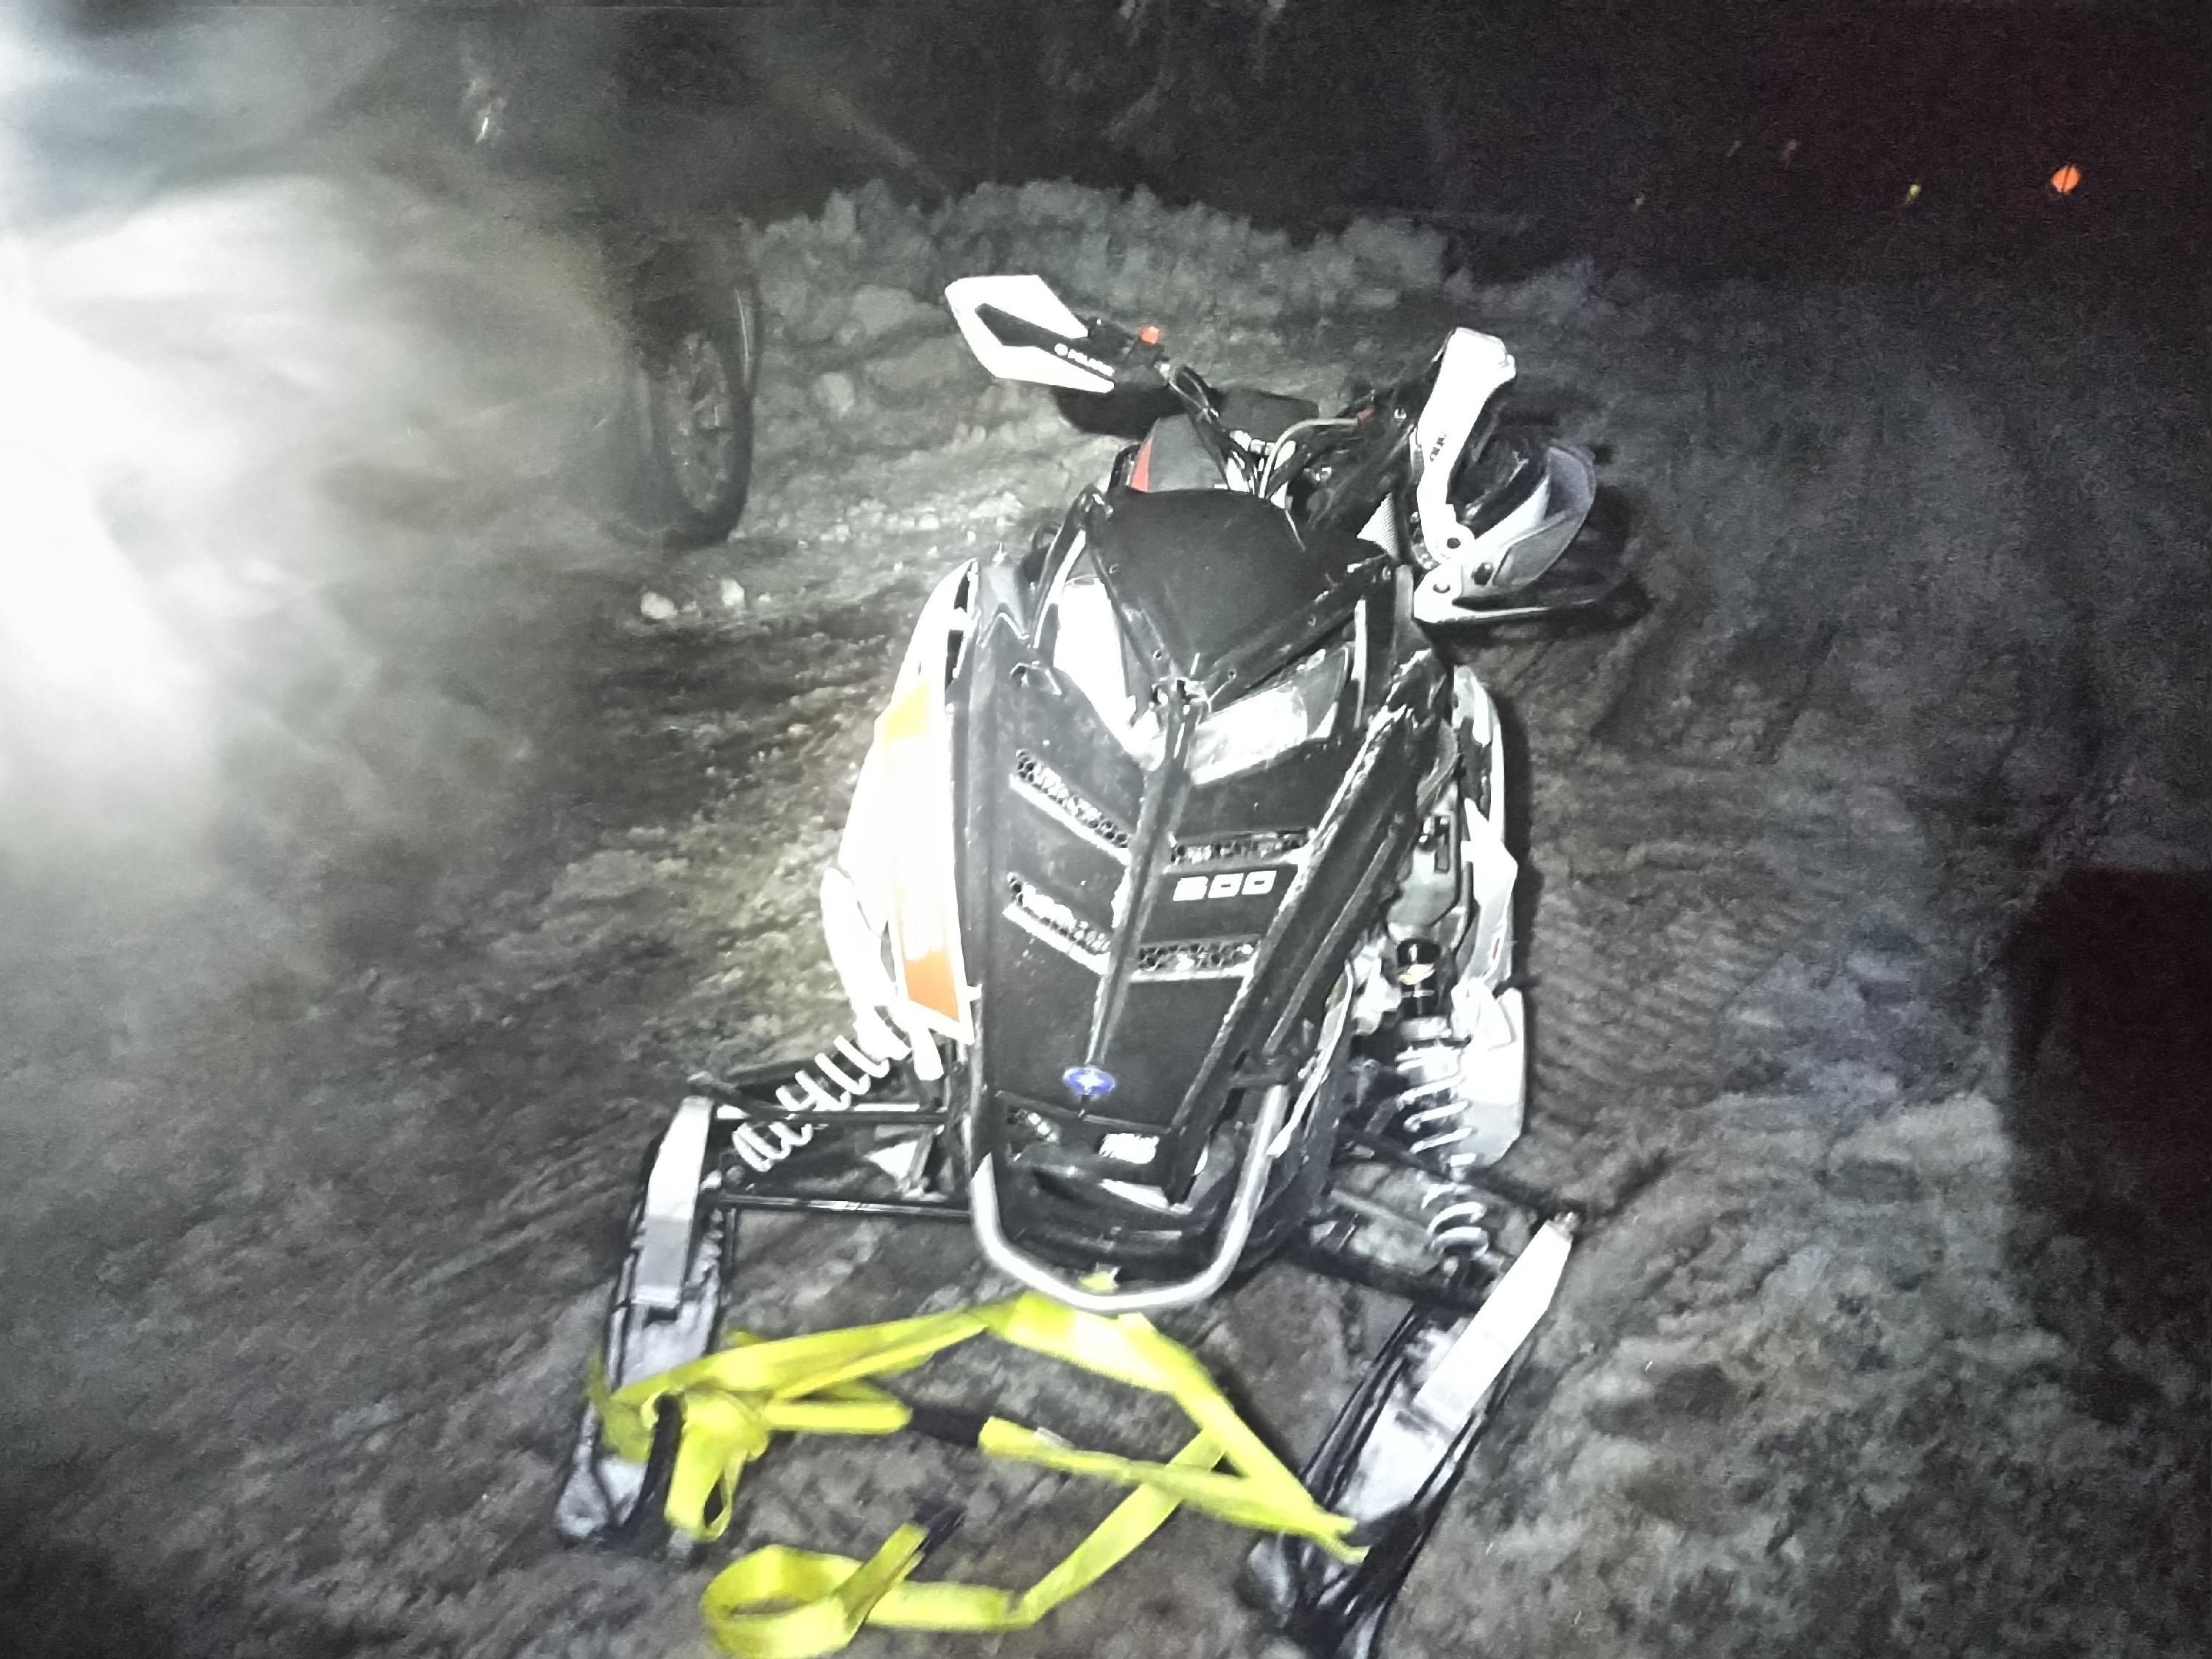 Brier Snowmobile Crash